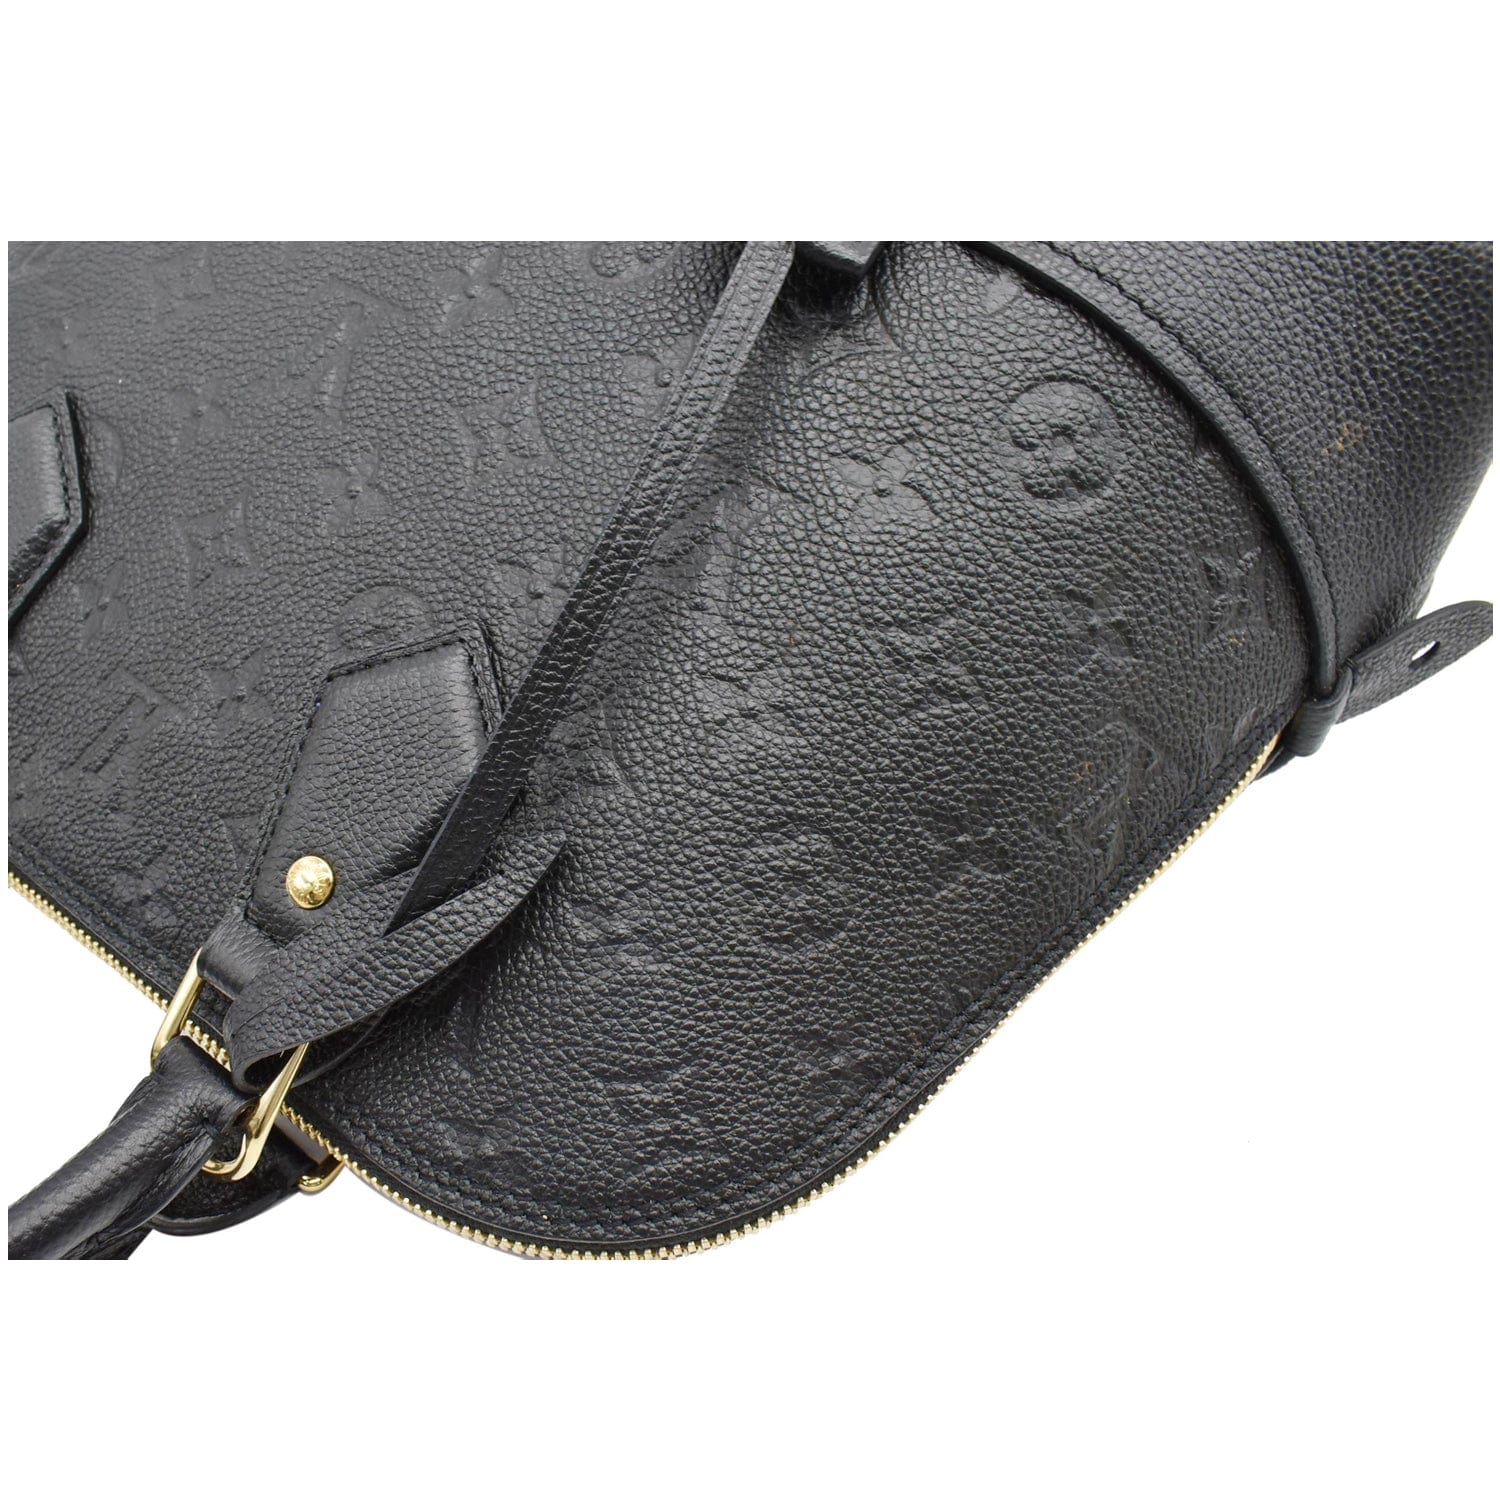 Néo Alma PM bag - Luxury Monogram Empreinte Leather Black